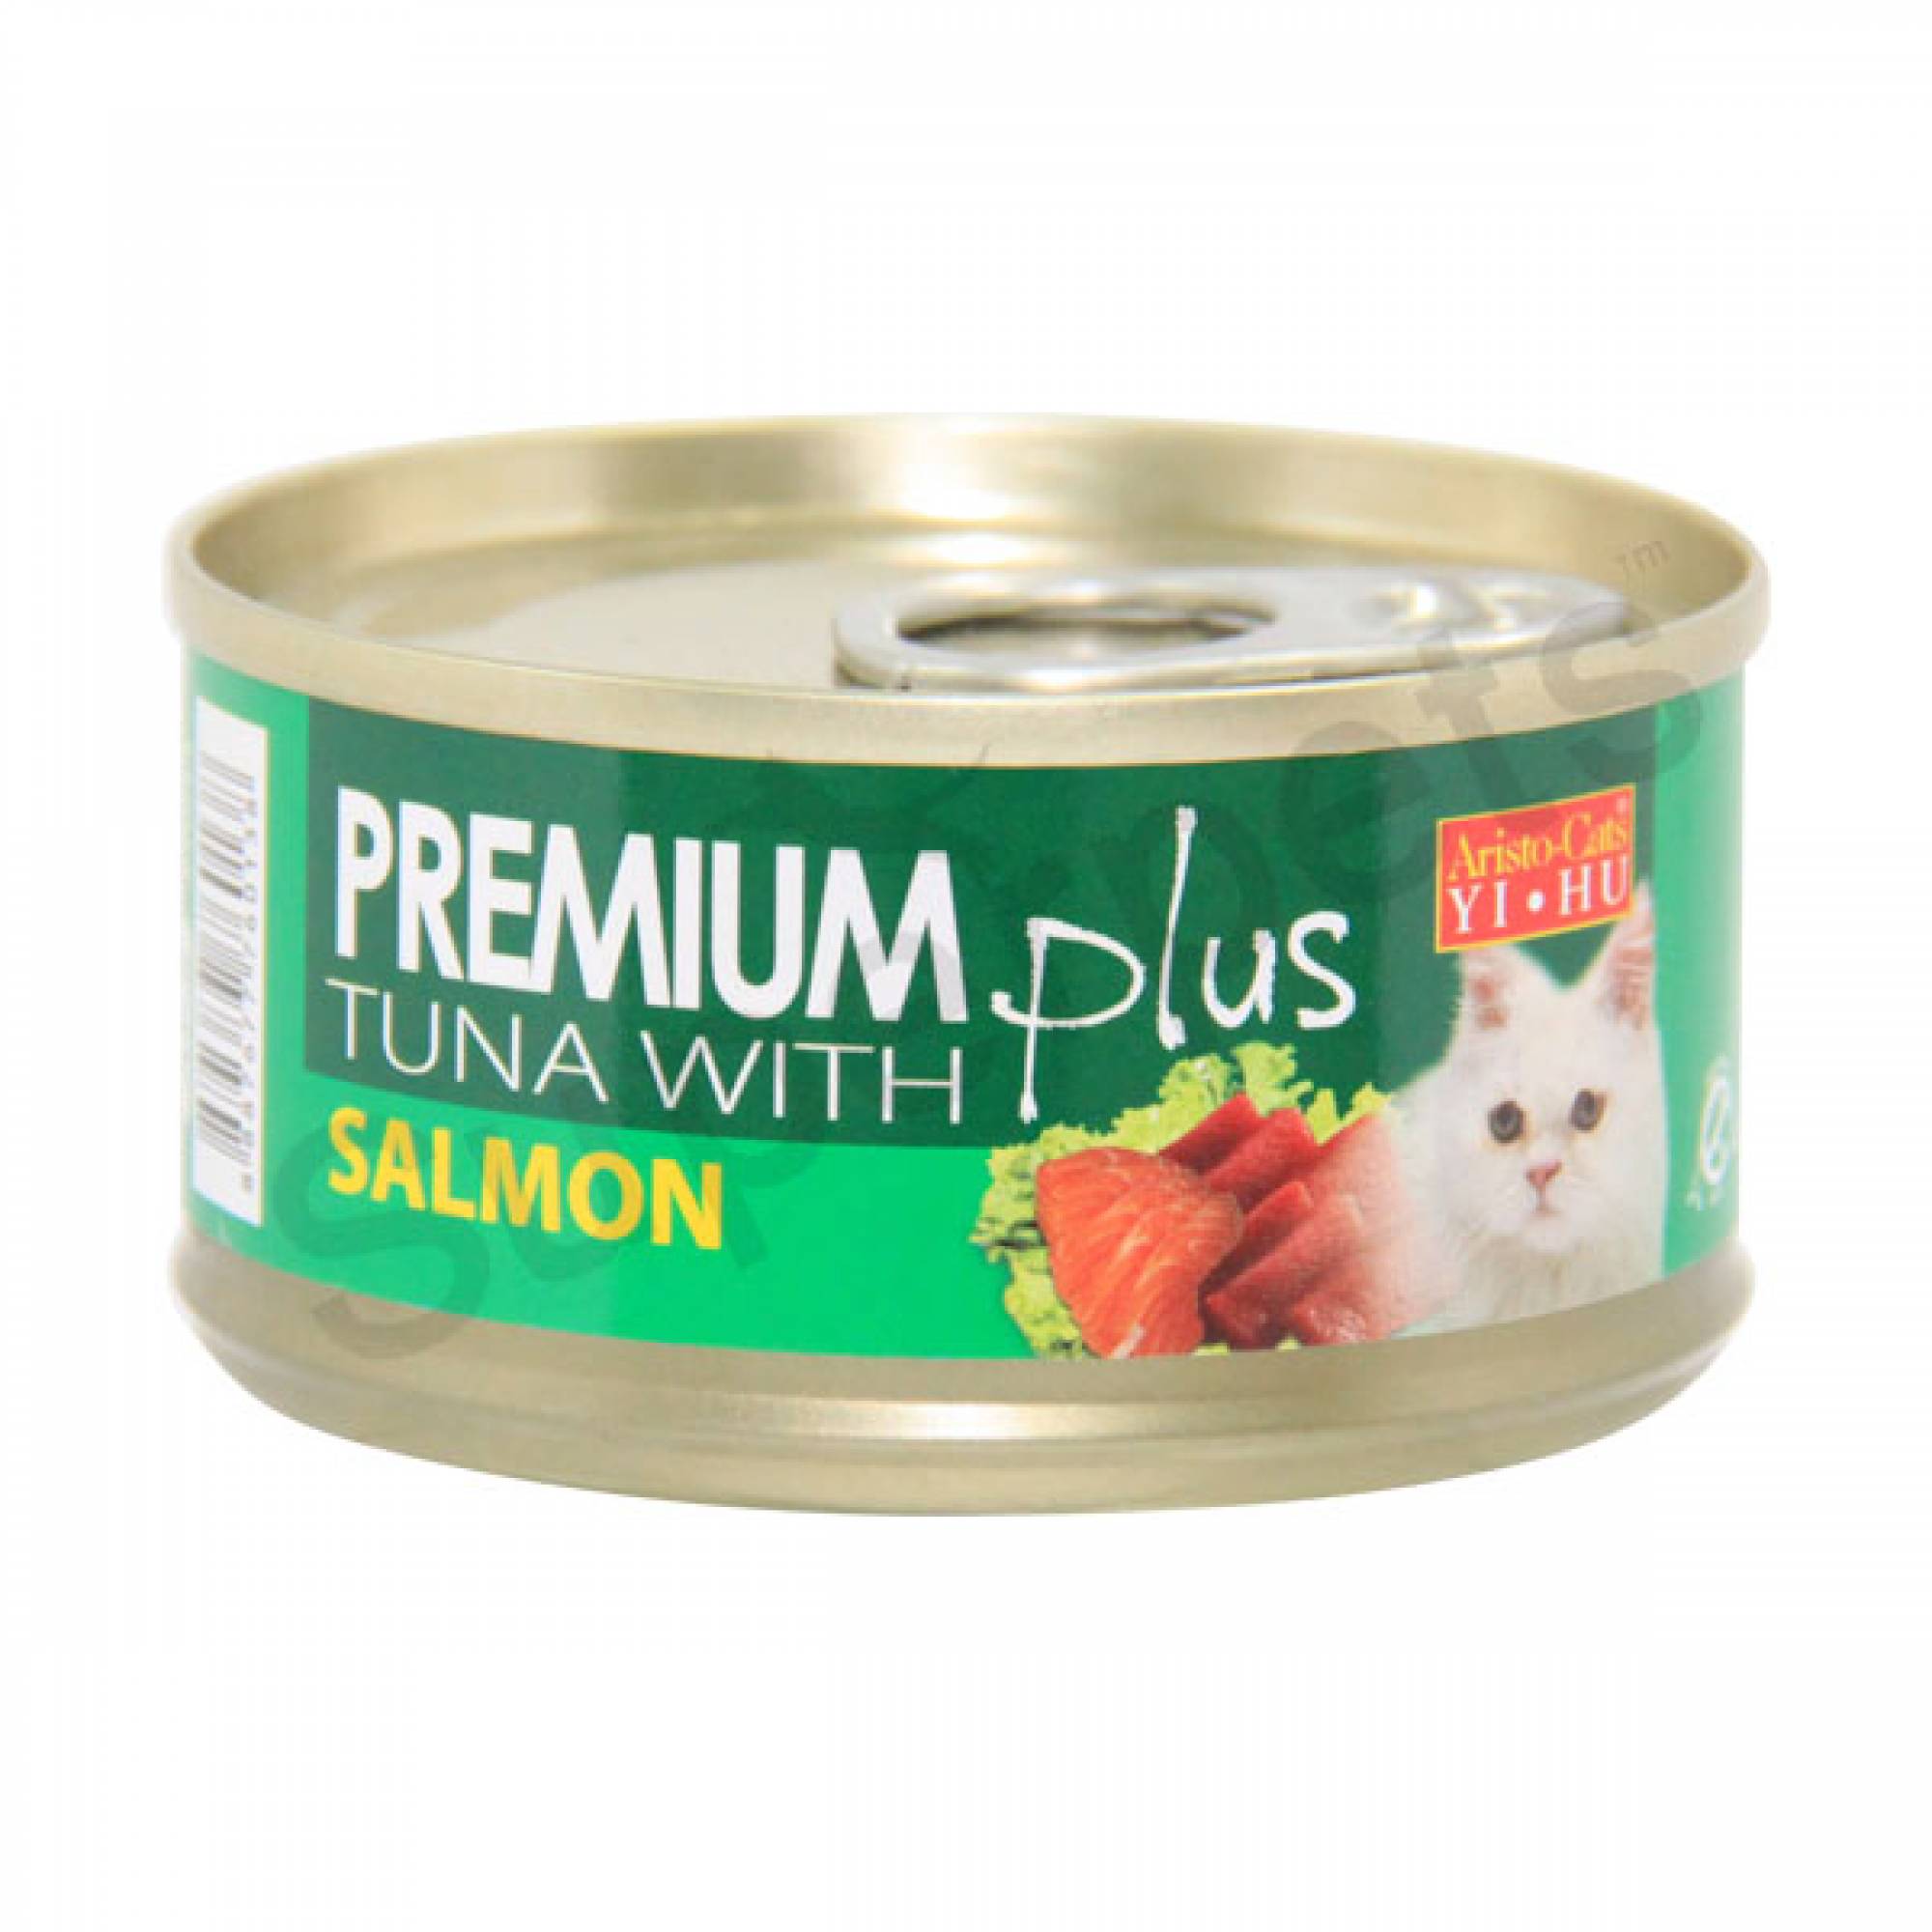 Aristo-Cats - Premium Plus - Tuna with Salmon 80g